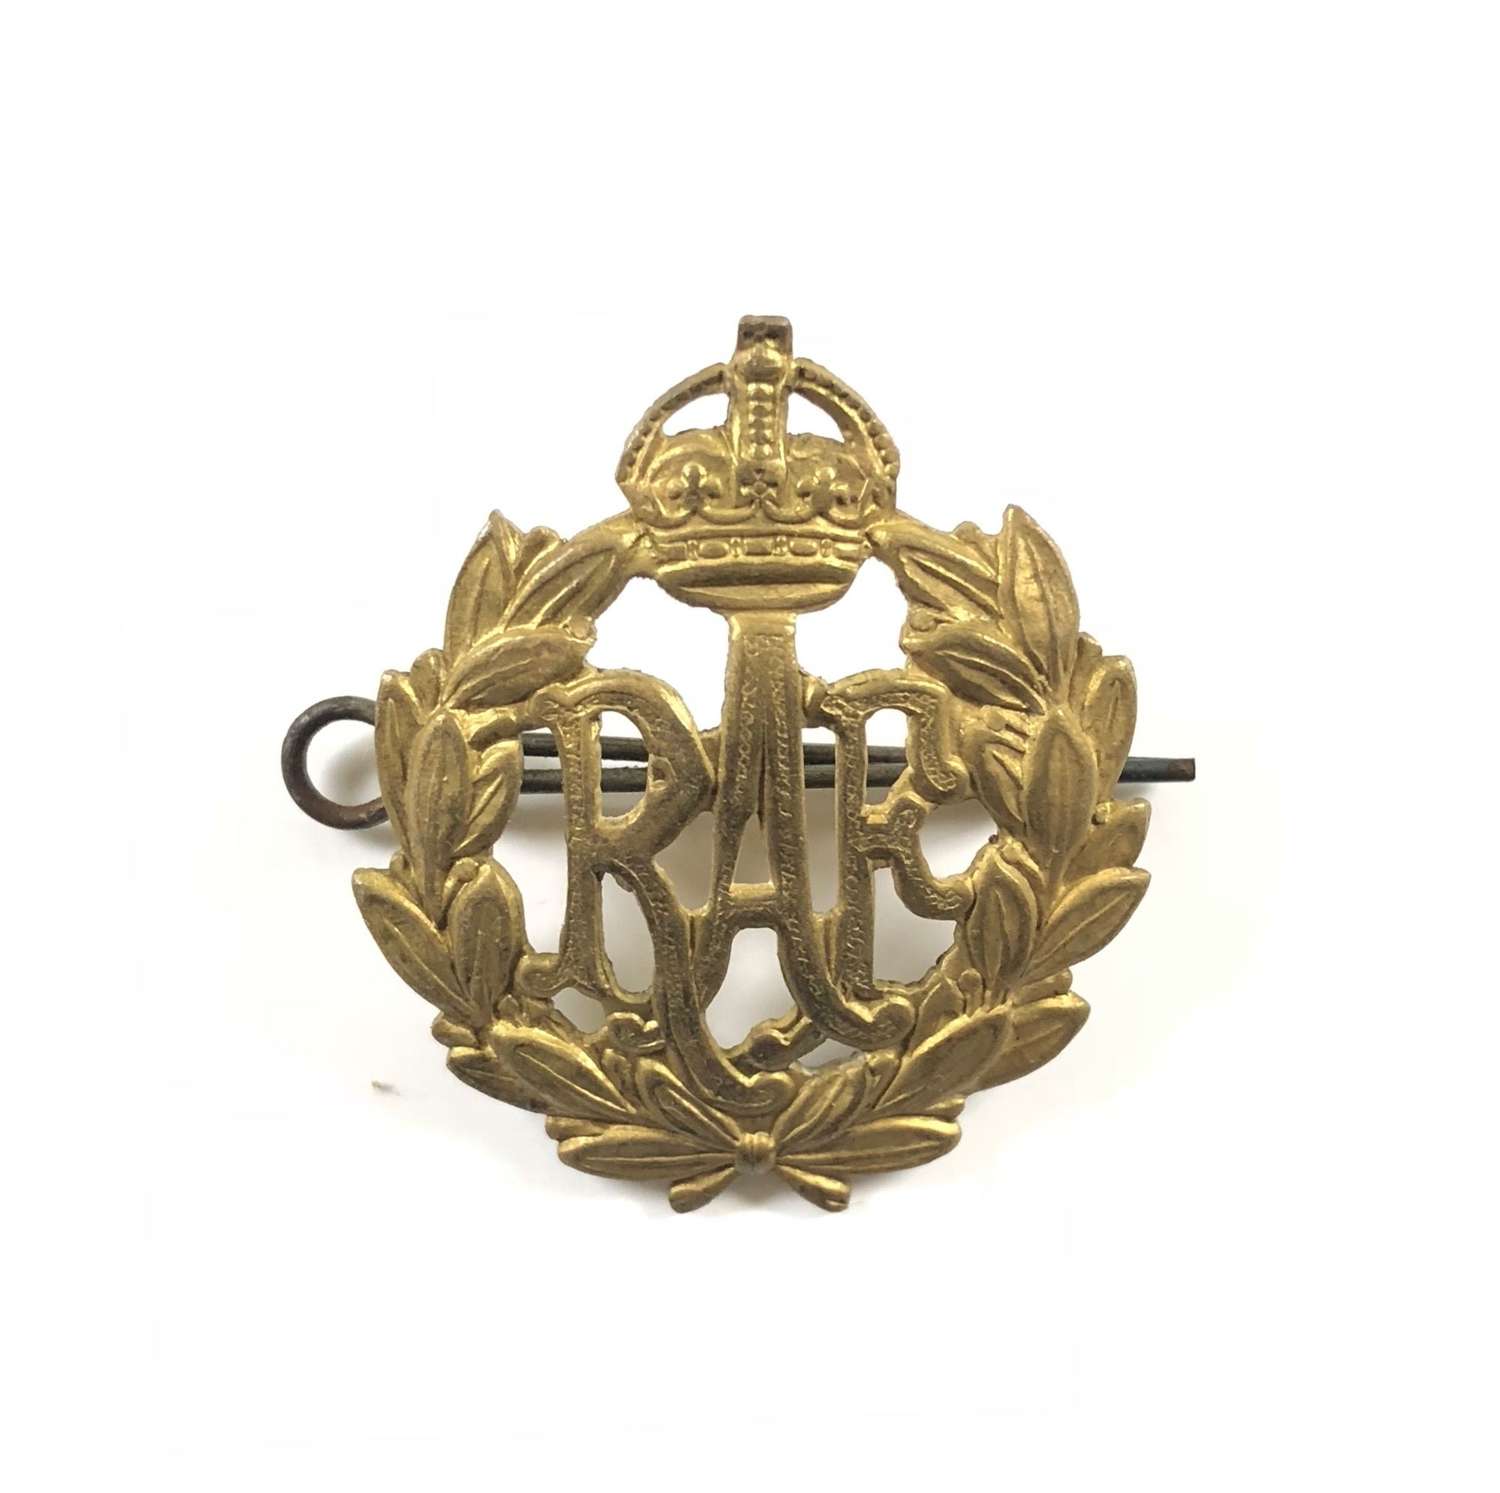 WW2 Period RAF Cap Badge.